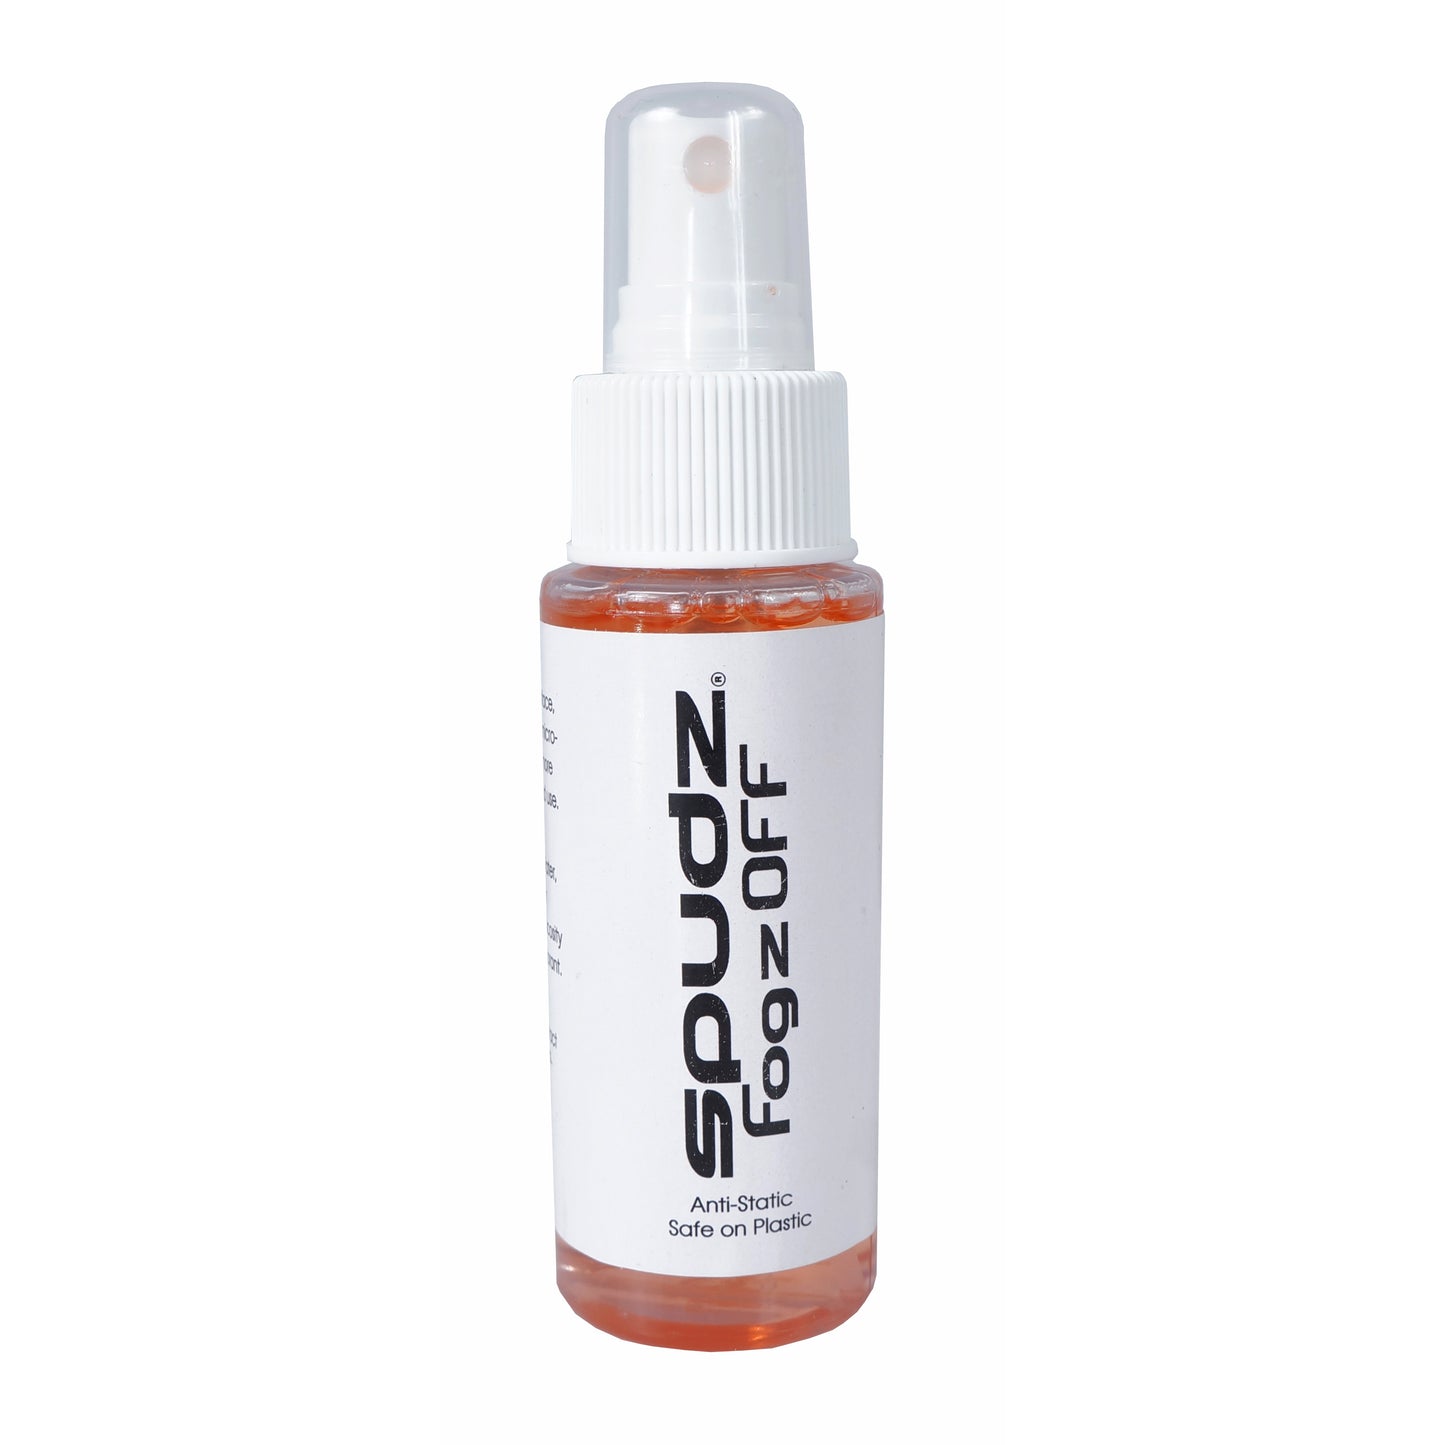 Fogz Off Anti-fog spray – Alpine Products